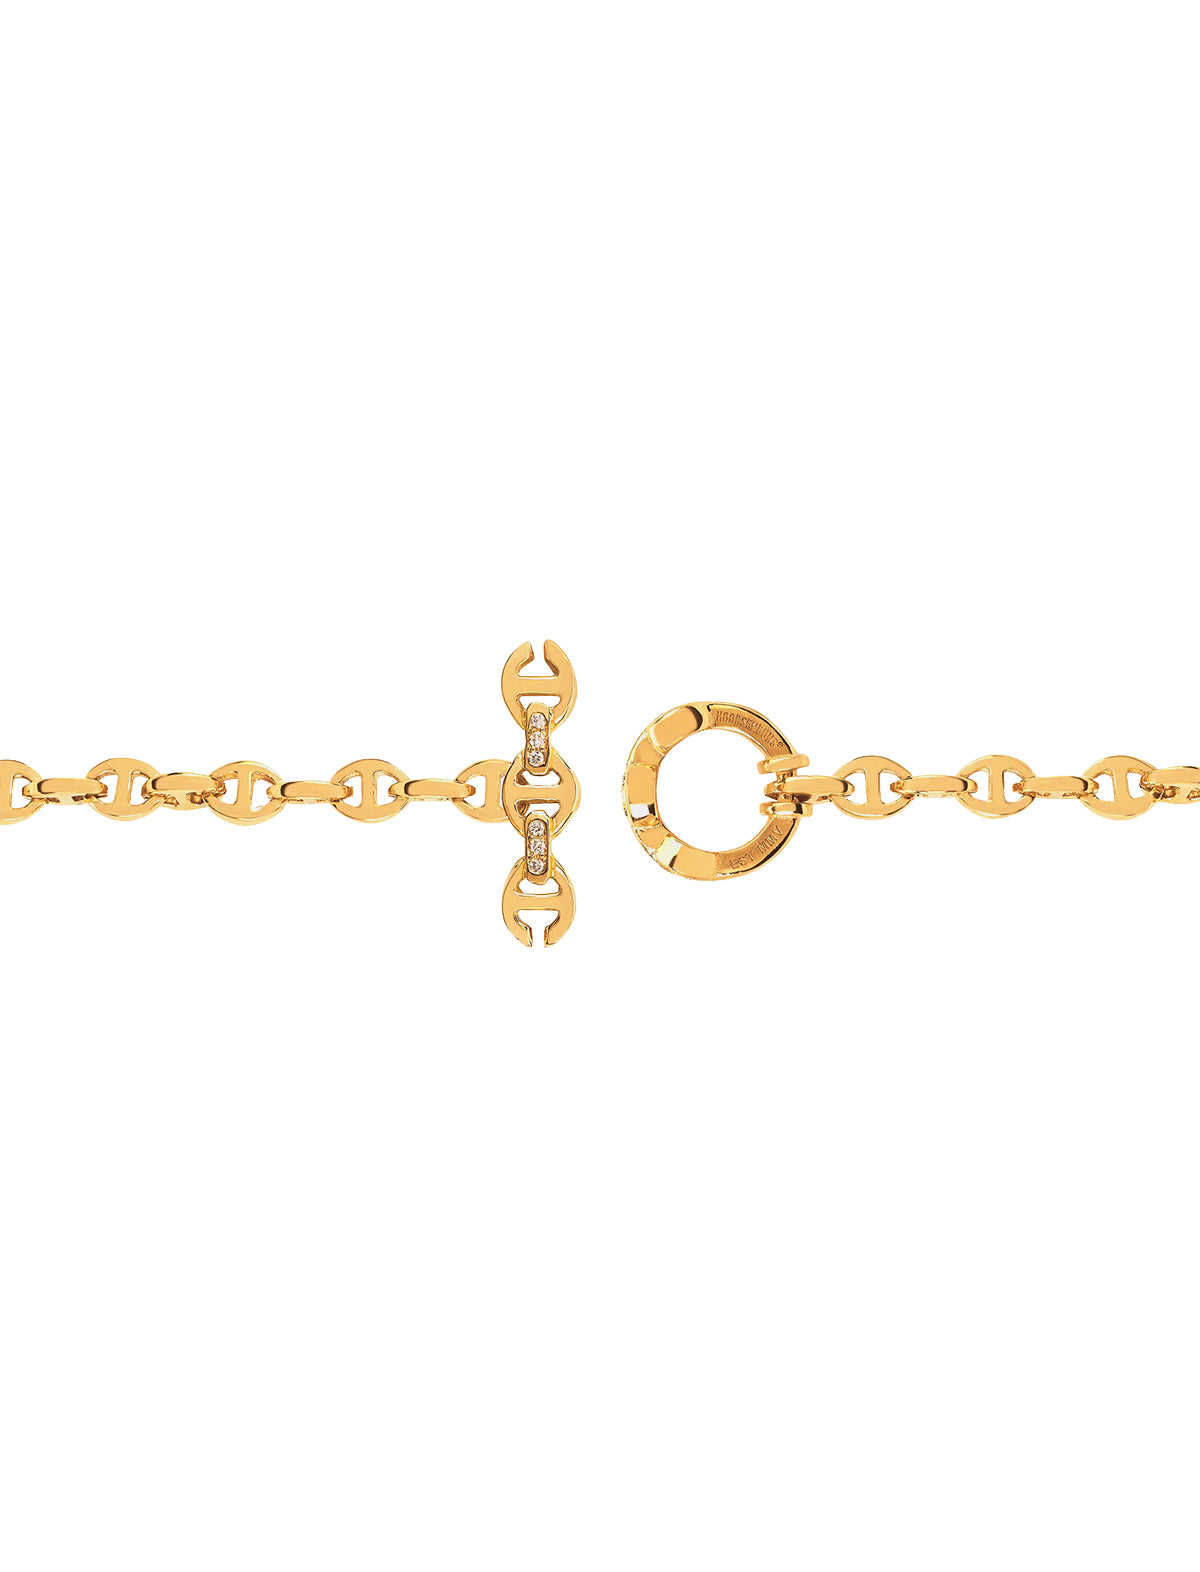 HOORSENBUHS 3mm Five Link Pave Bracelet 18k Yellow Gold